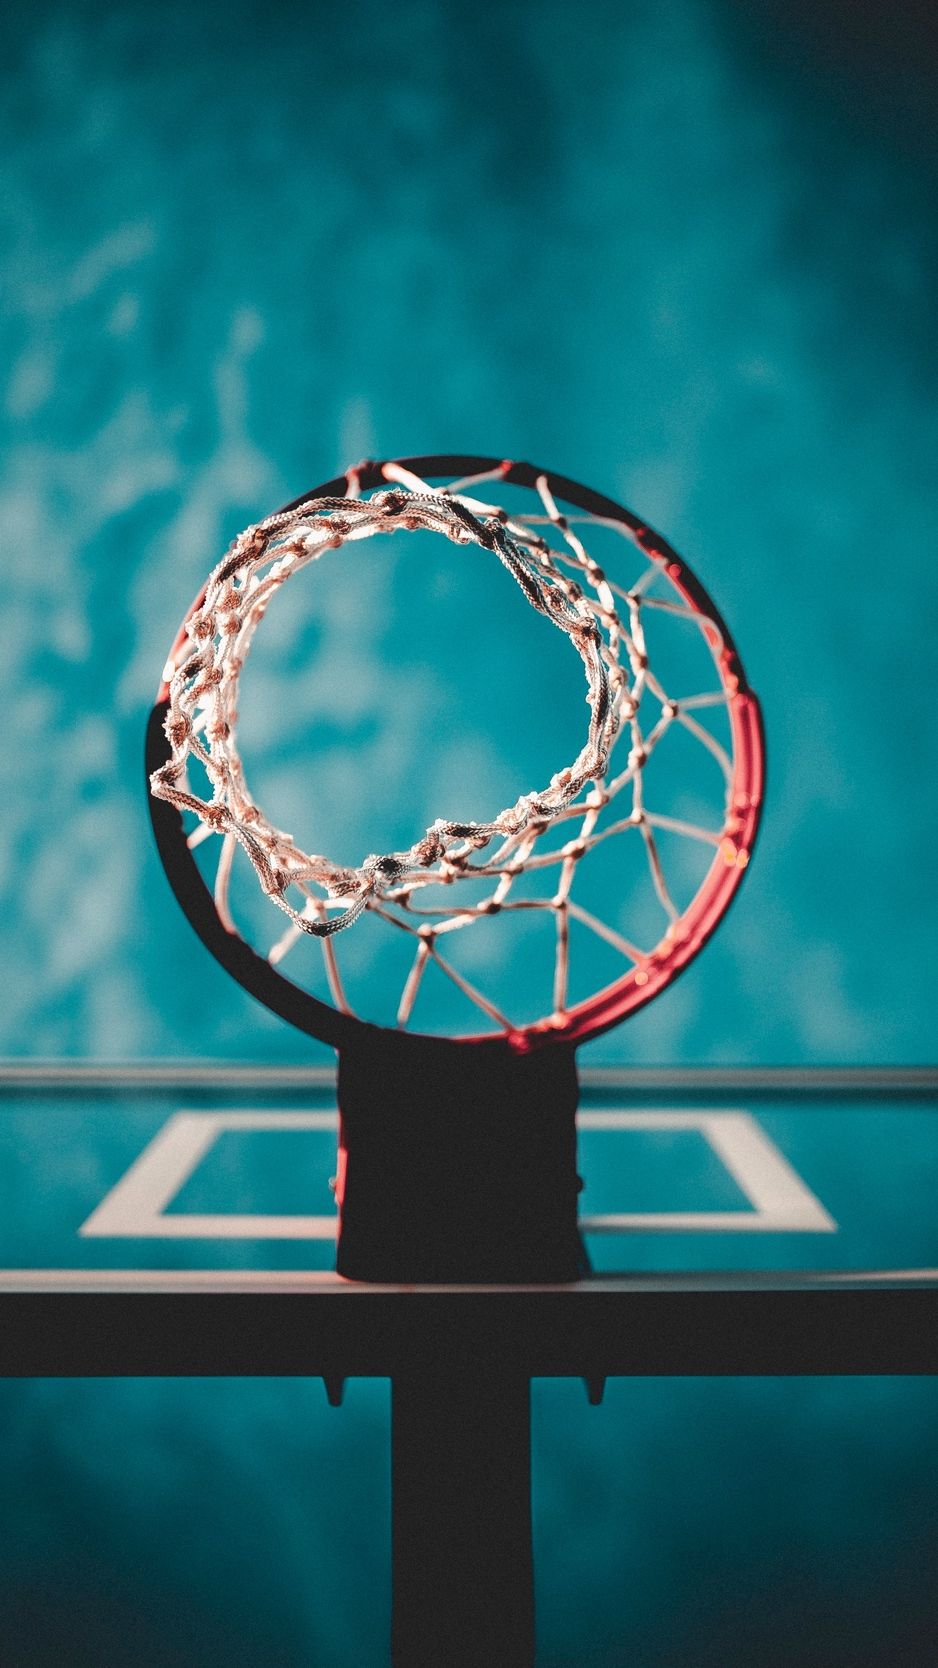 Basketball ring, mesh, blur wallpaper, background iphone